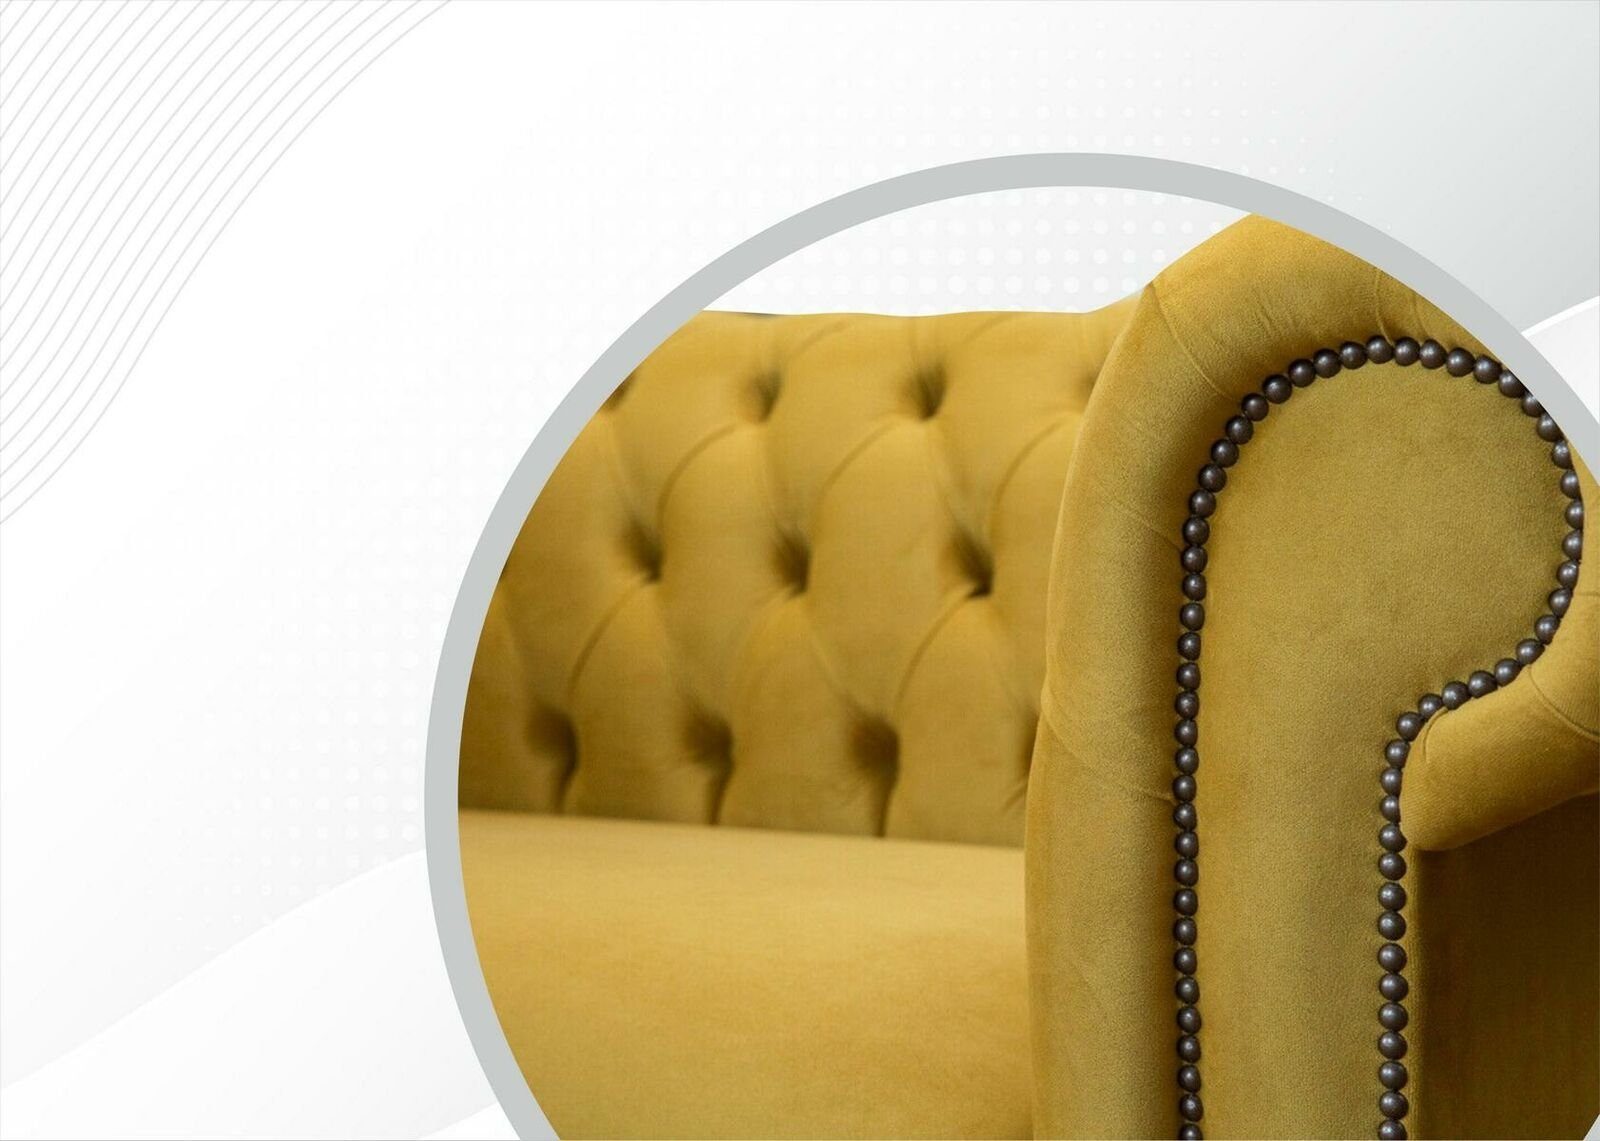 Sitzer Gelb 2 Neu Couchen JVmoebel Chesterfield Sofa Sofas Chesterfield-Sofa, Design Polster